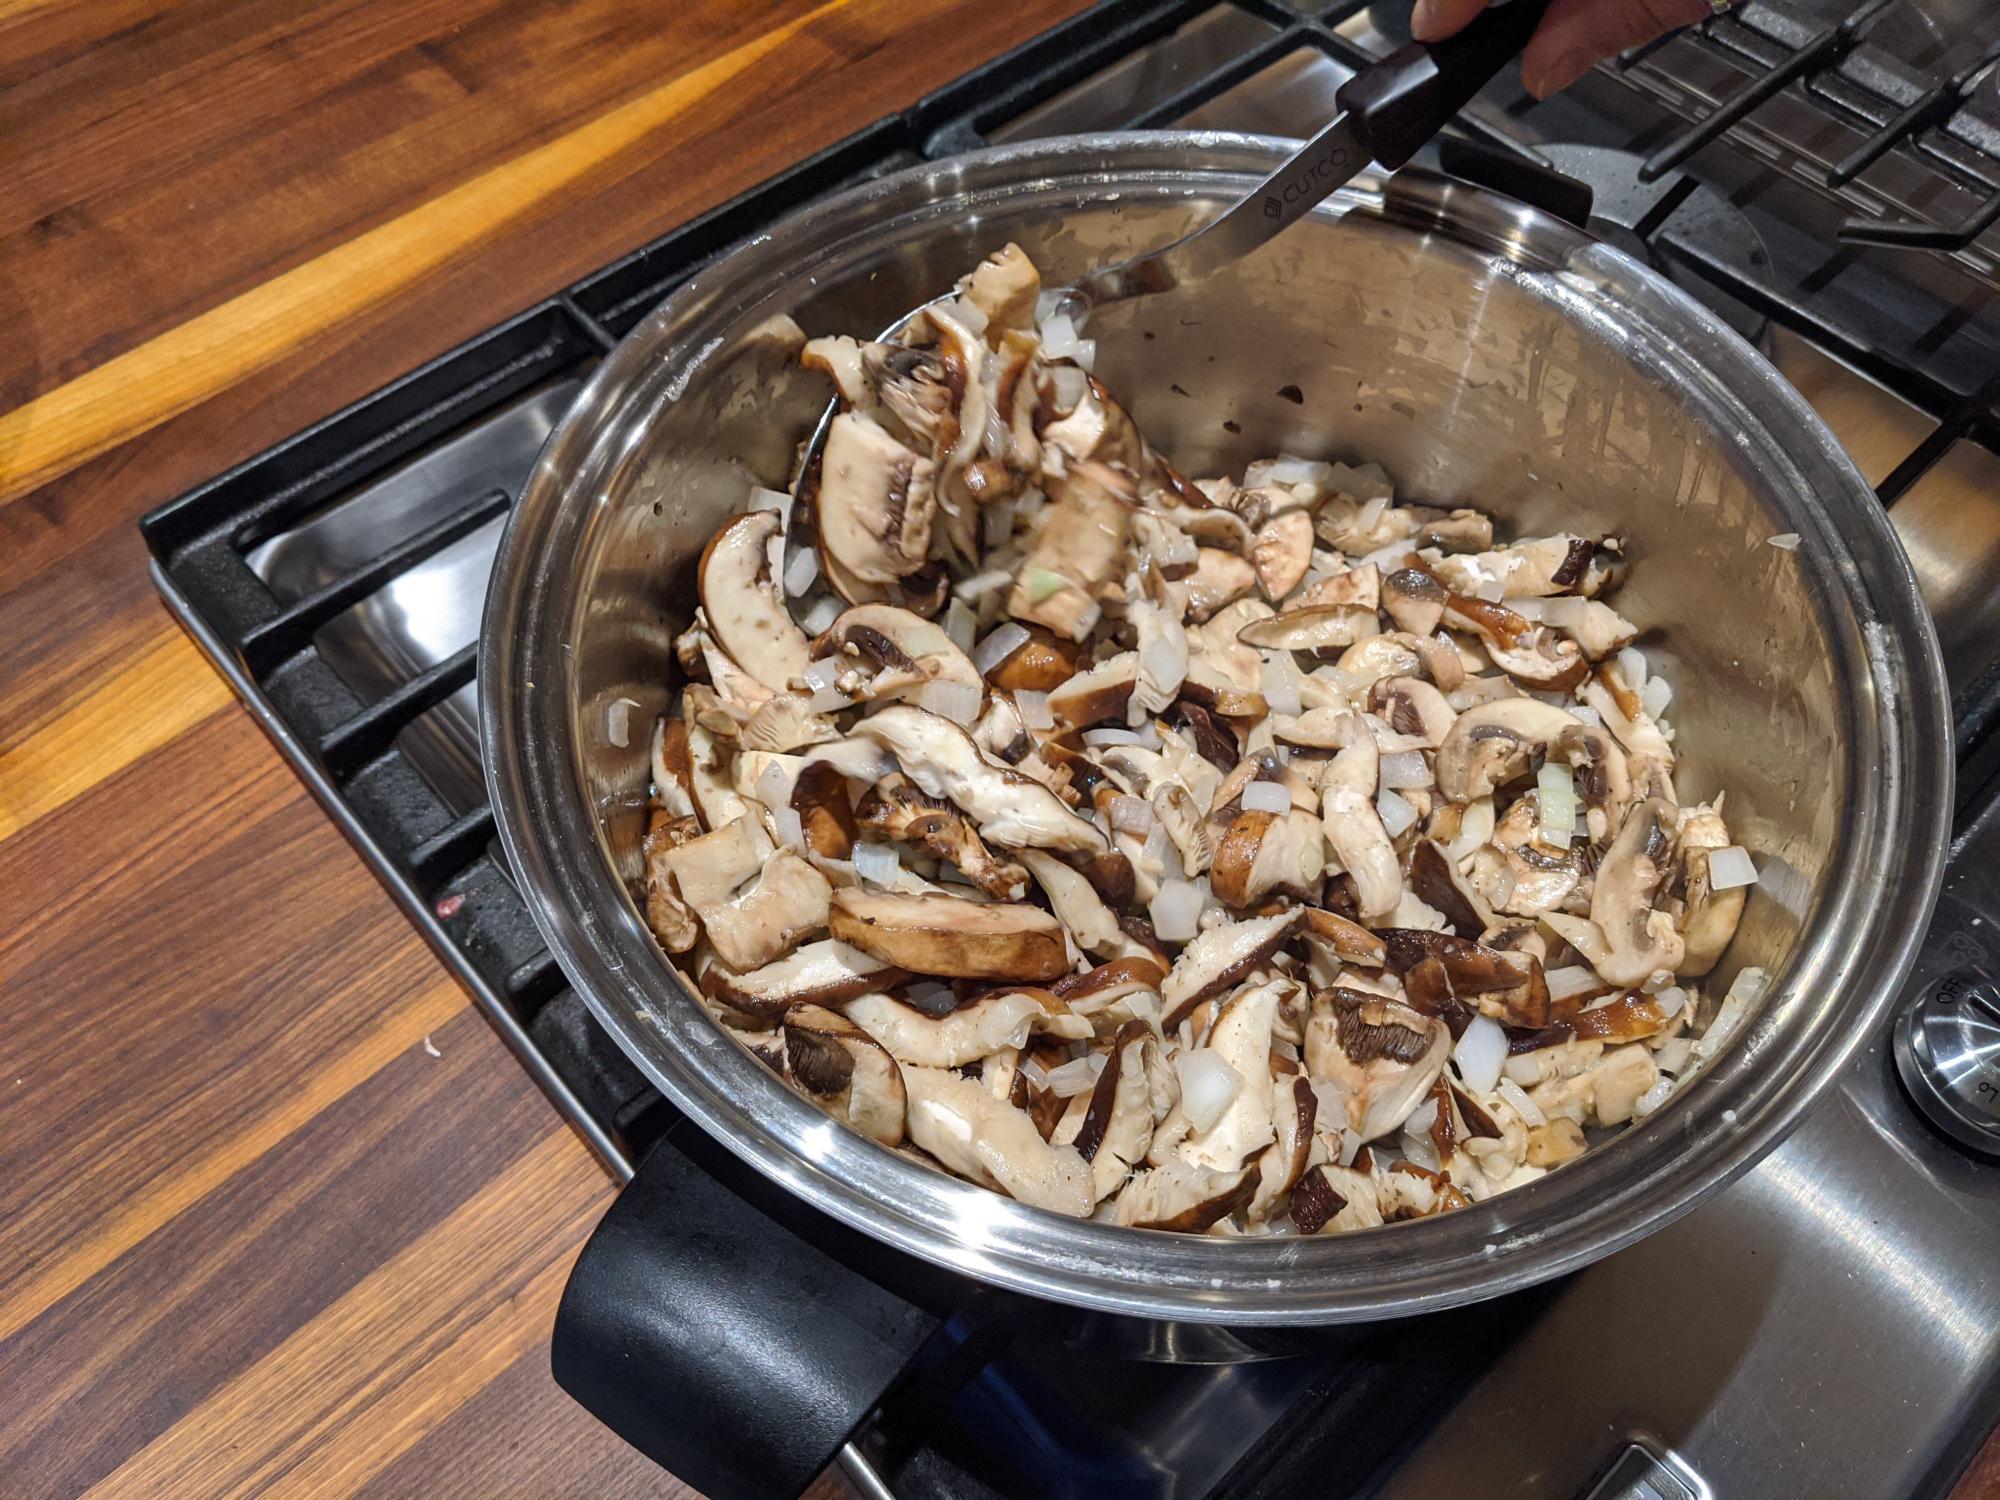 Sauteed mushrooms and onions.